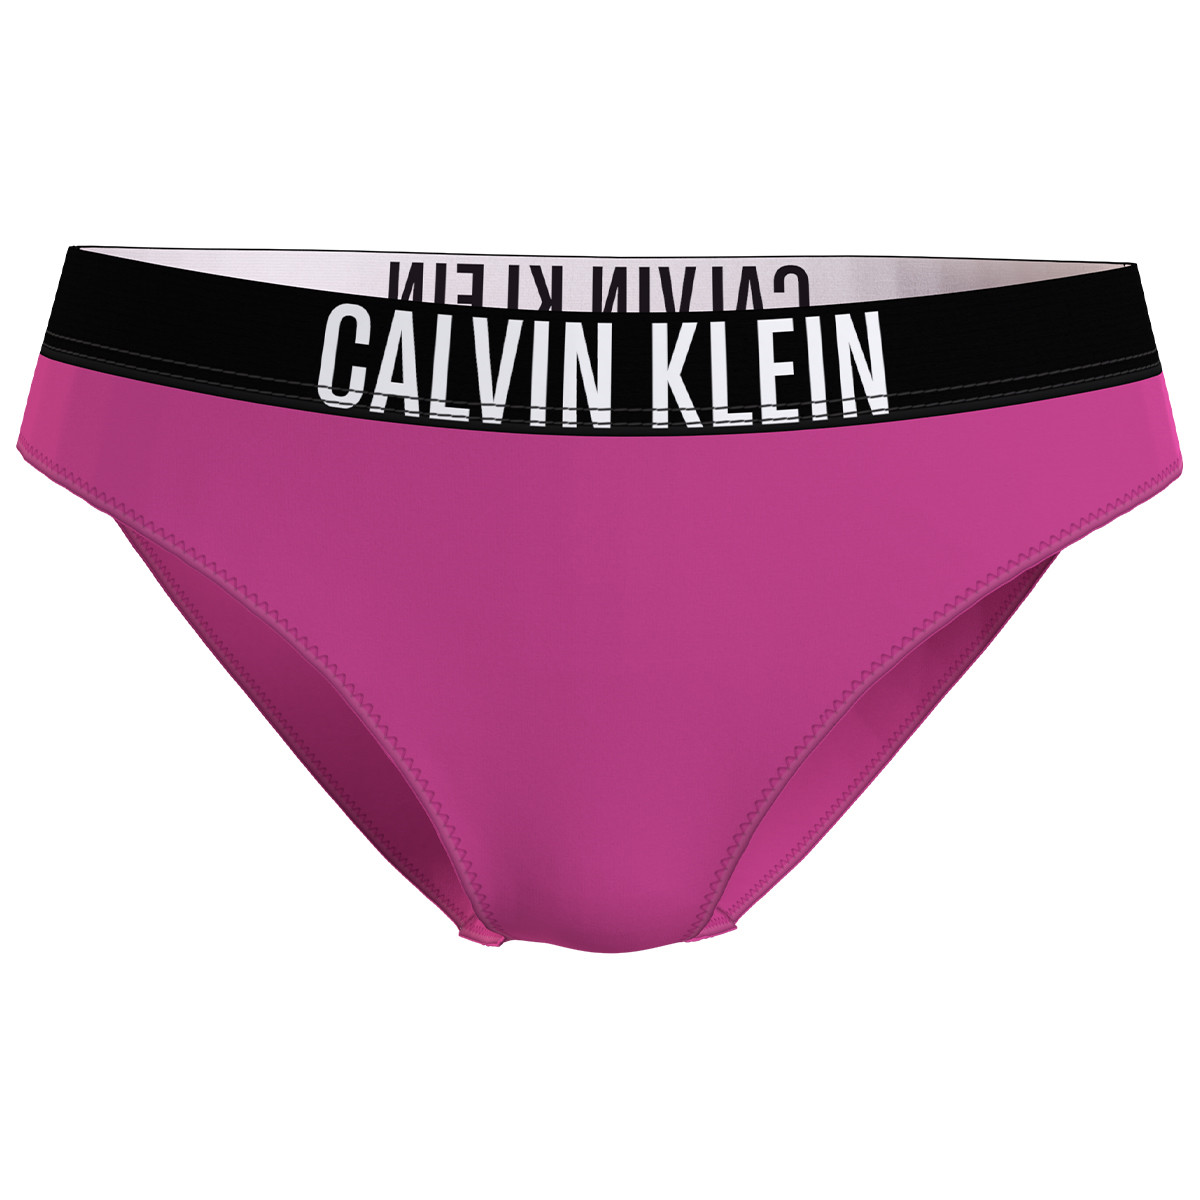 Calvin Klein Bikini Tai W To, Farve: Stunning Orchid, Størrelse: L, Dame